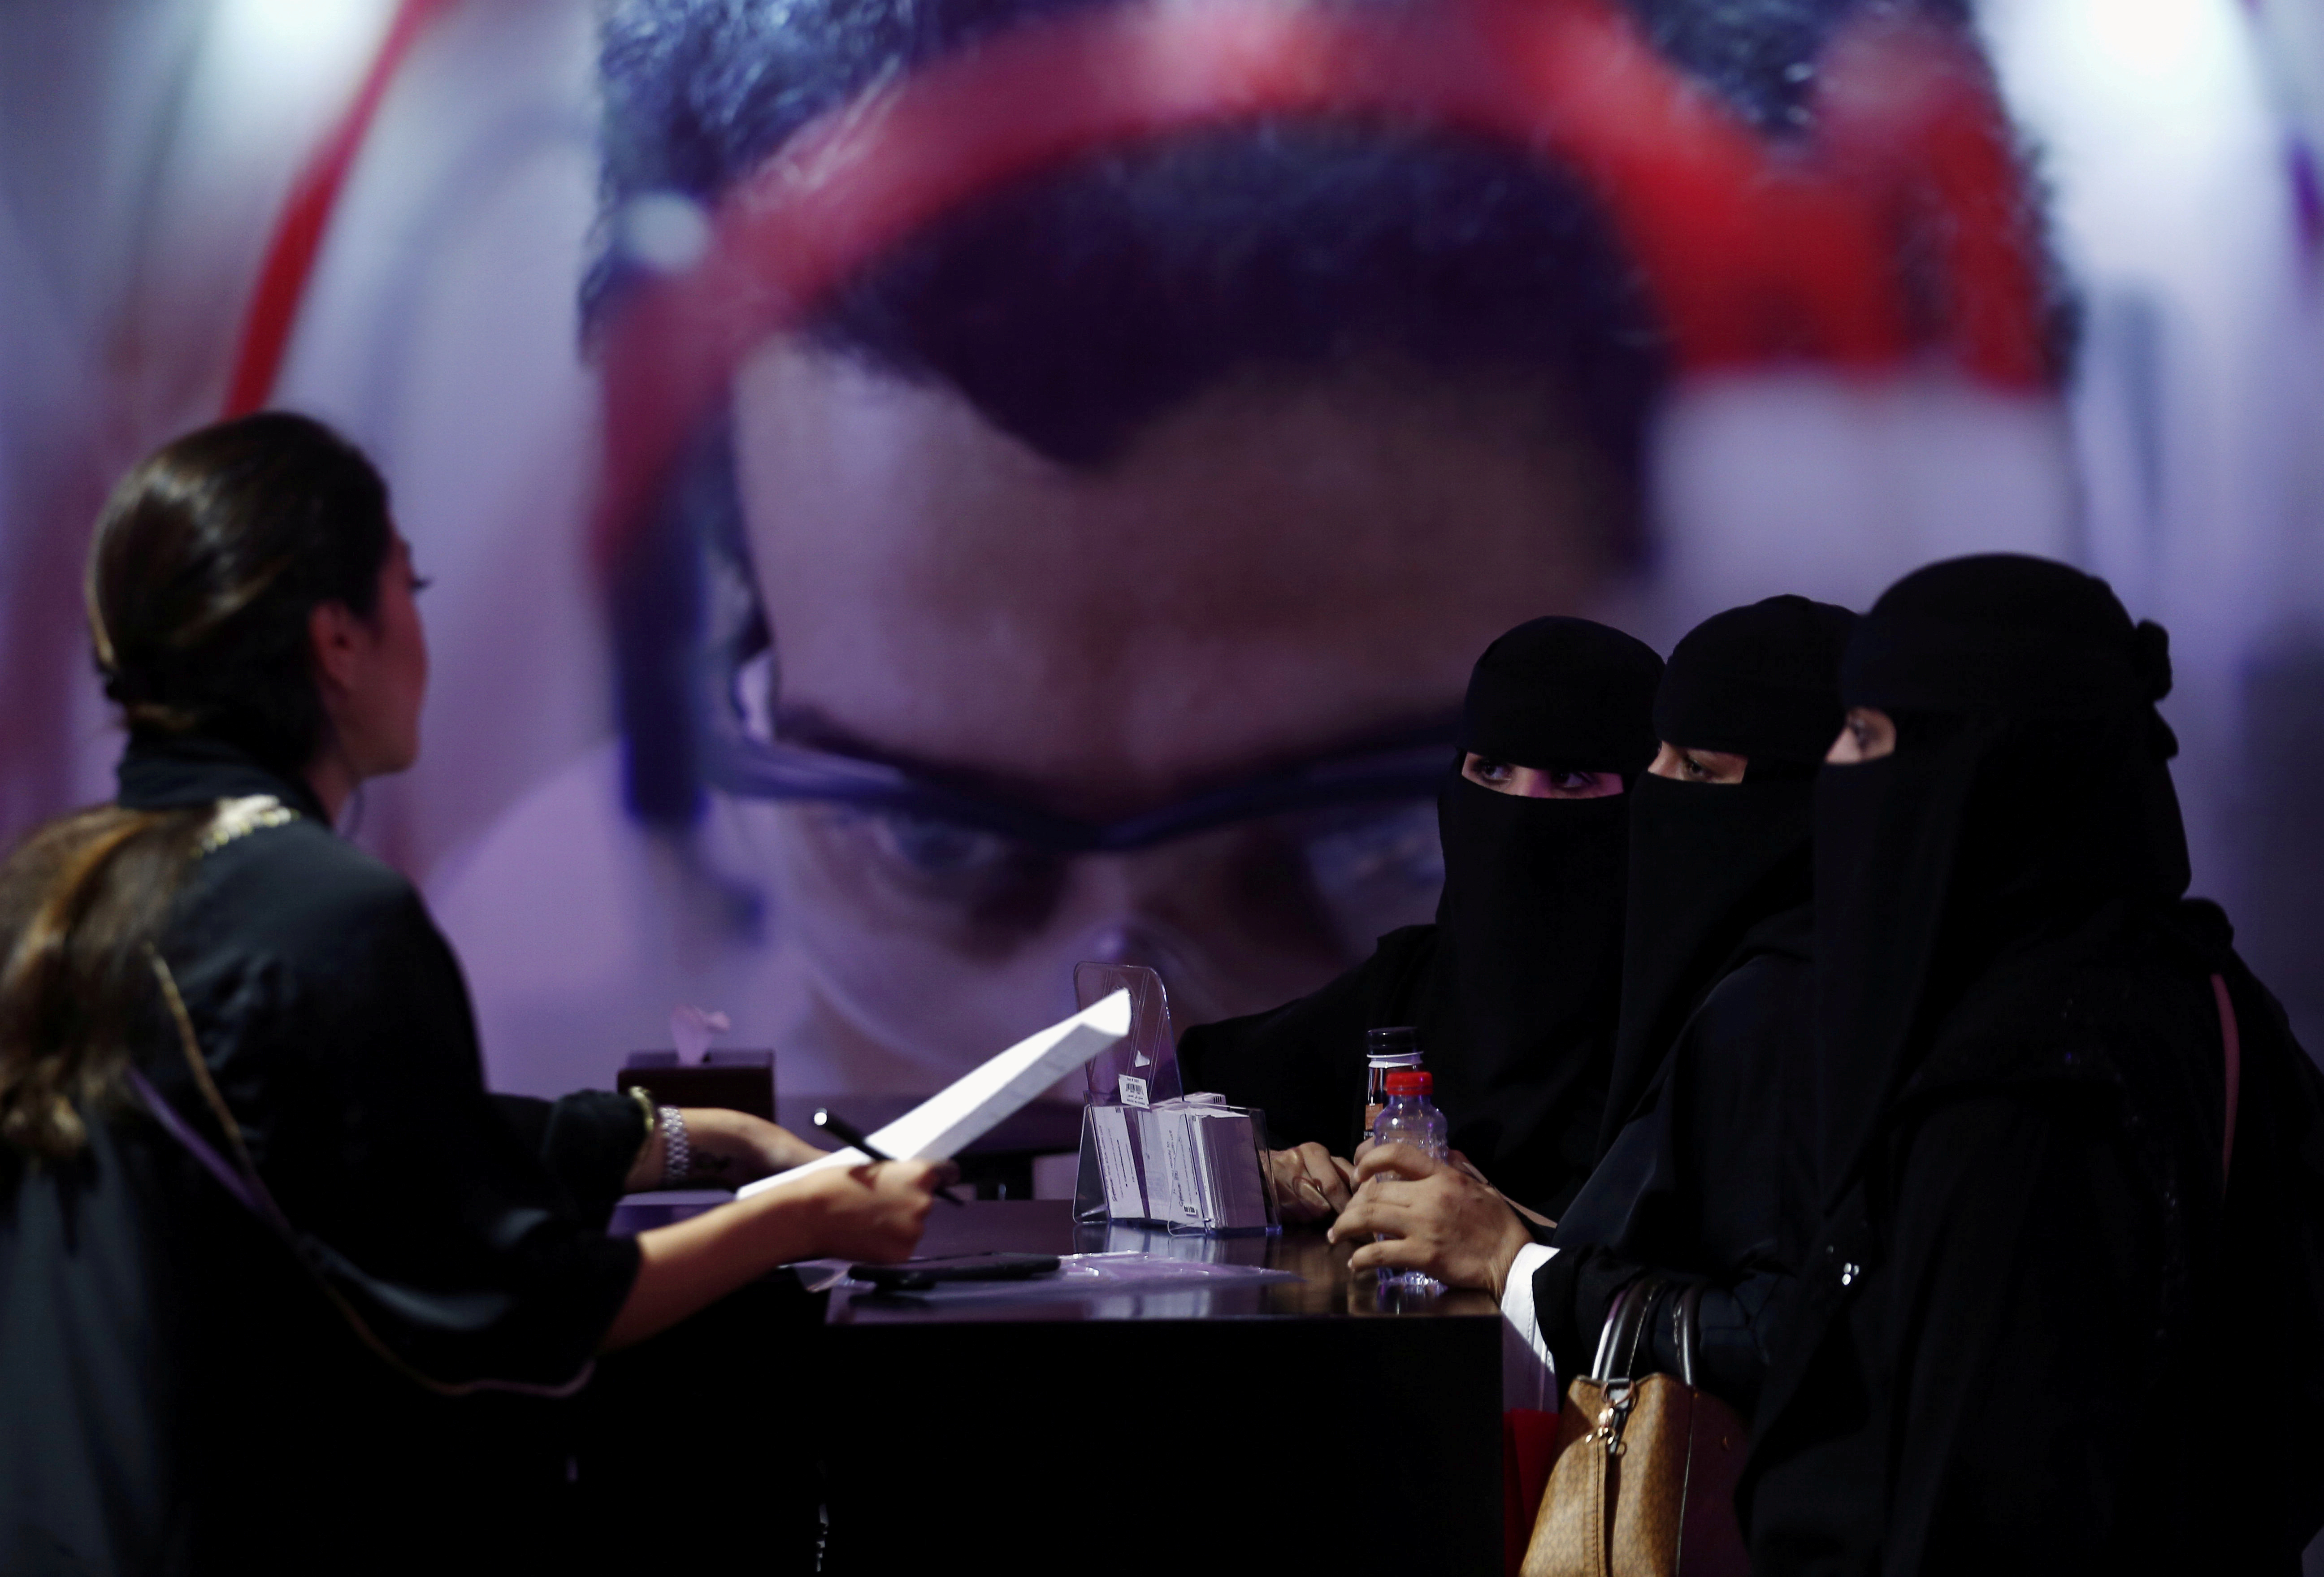 Saudi job seekers talk to a company representative at Glowork Women's Career Fair in Riyadh